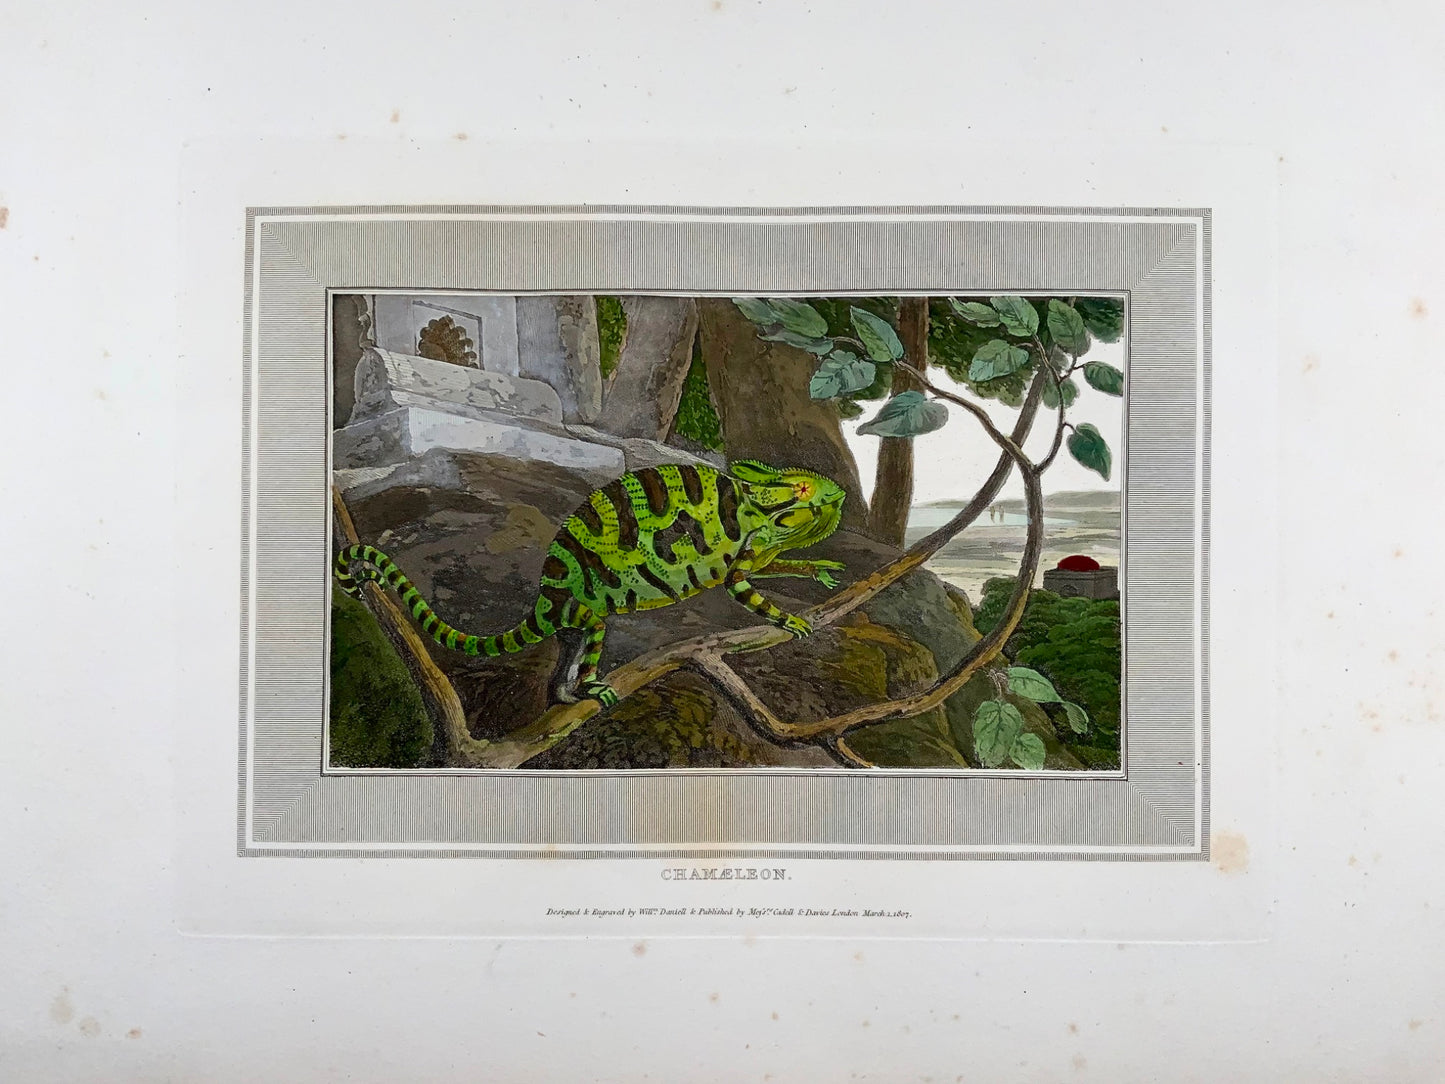 1807 William Daniell, Chamelon, Reptile, hand coloured aquatint